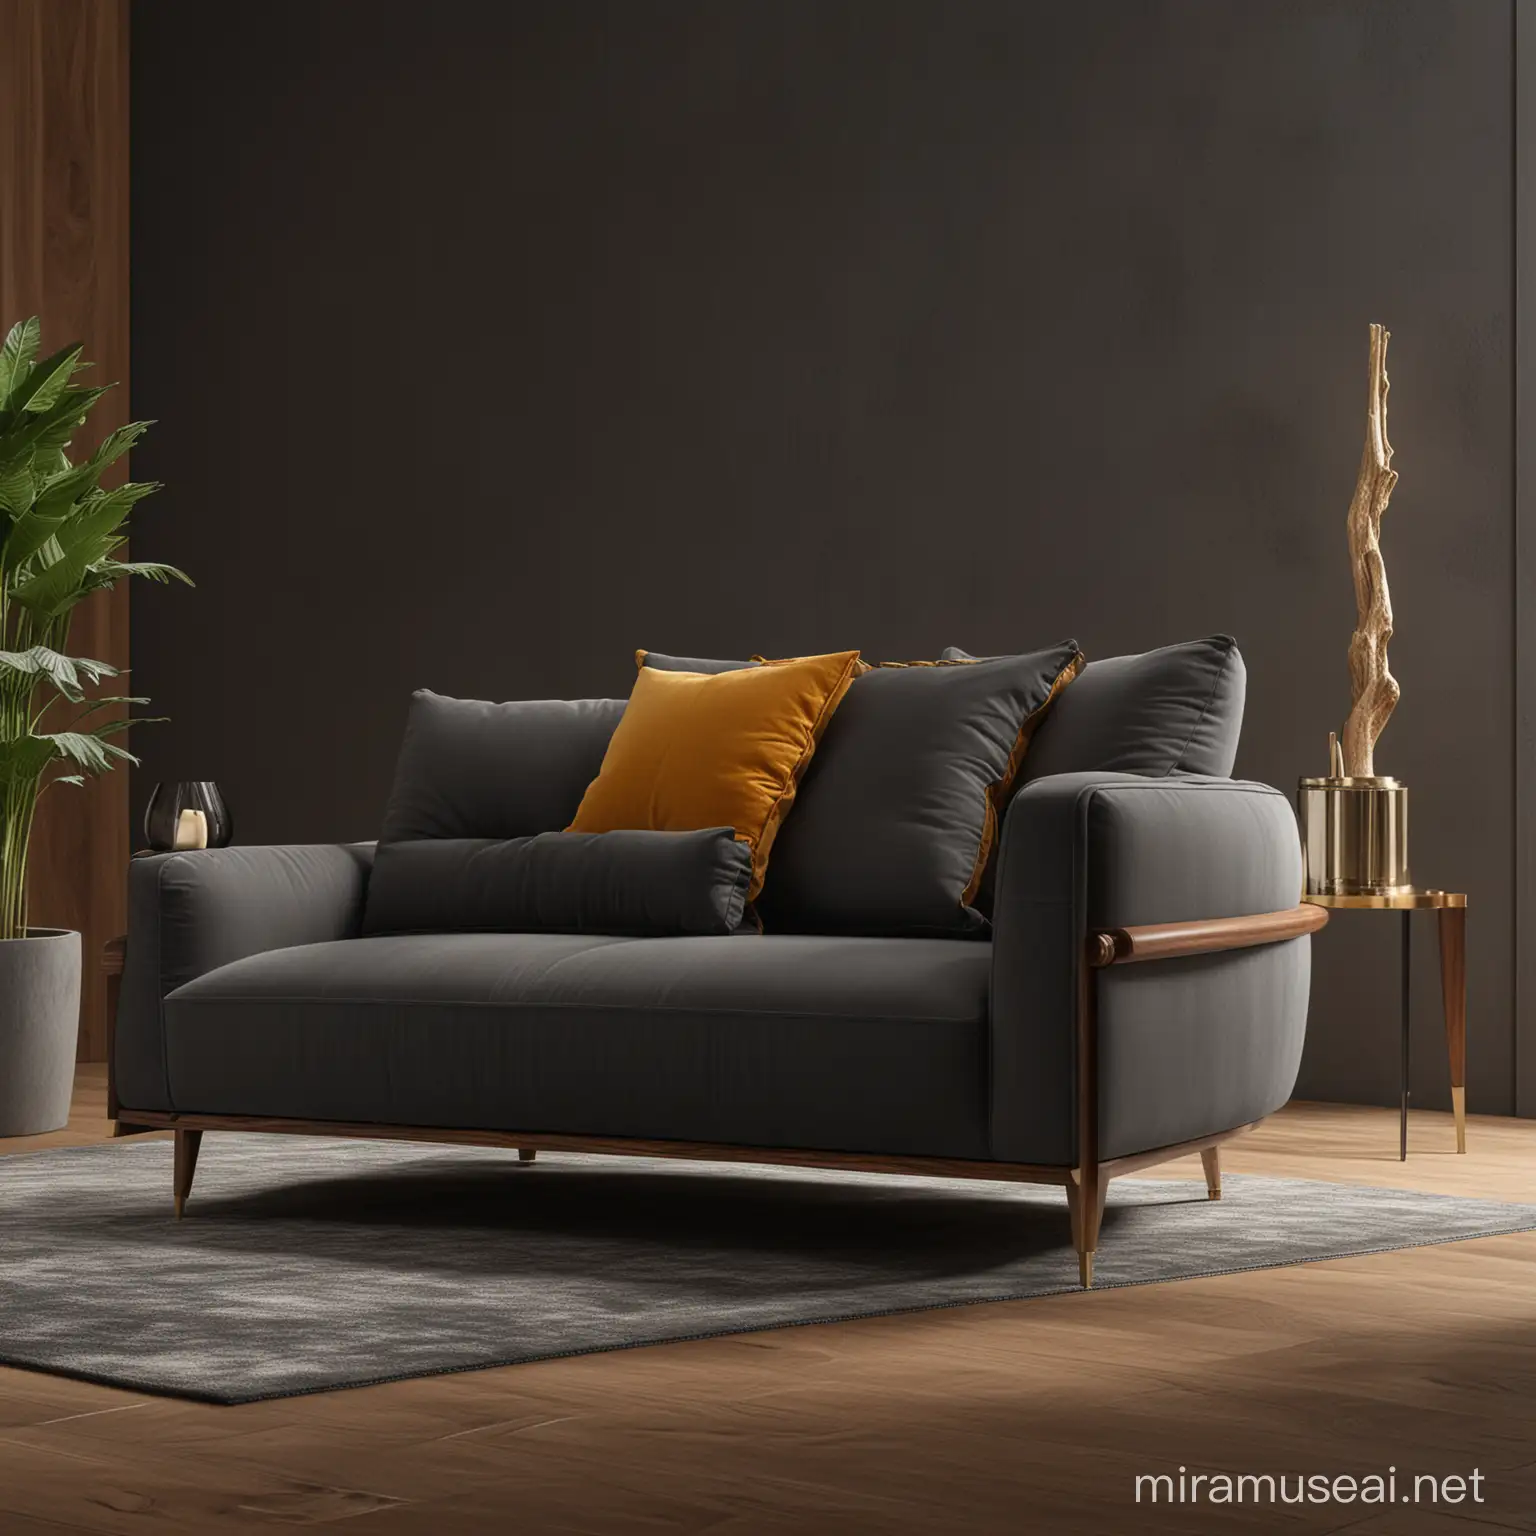 Elegant Sofa Design in a Luxurious Living Space